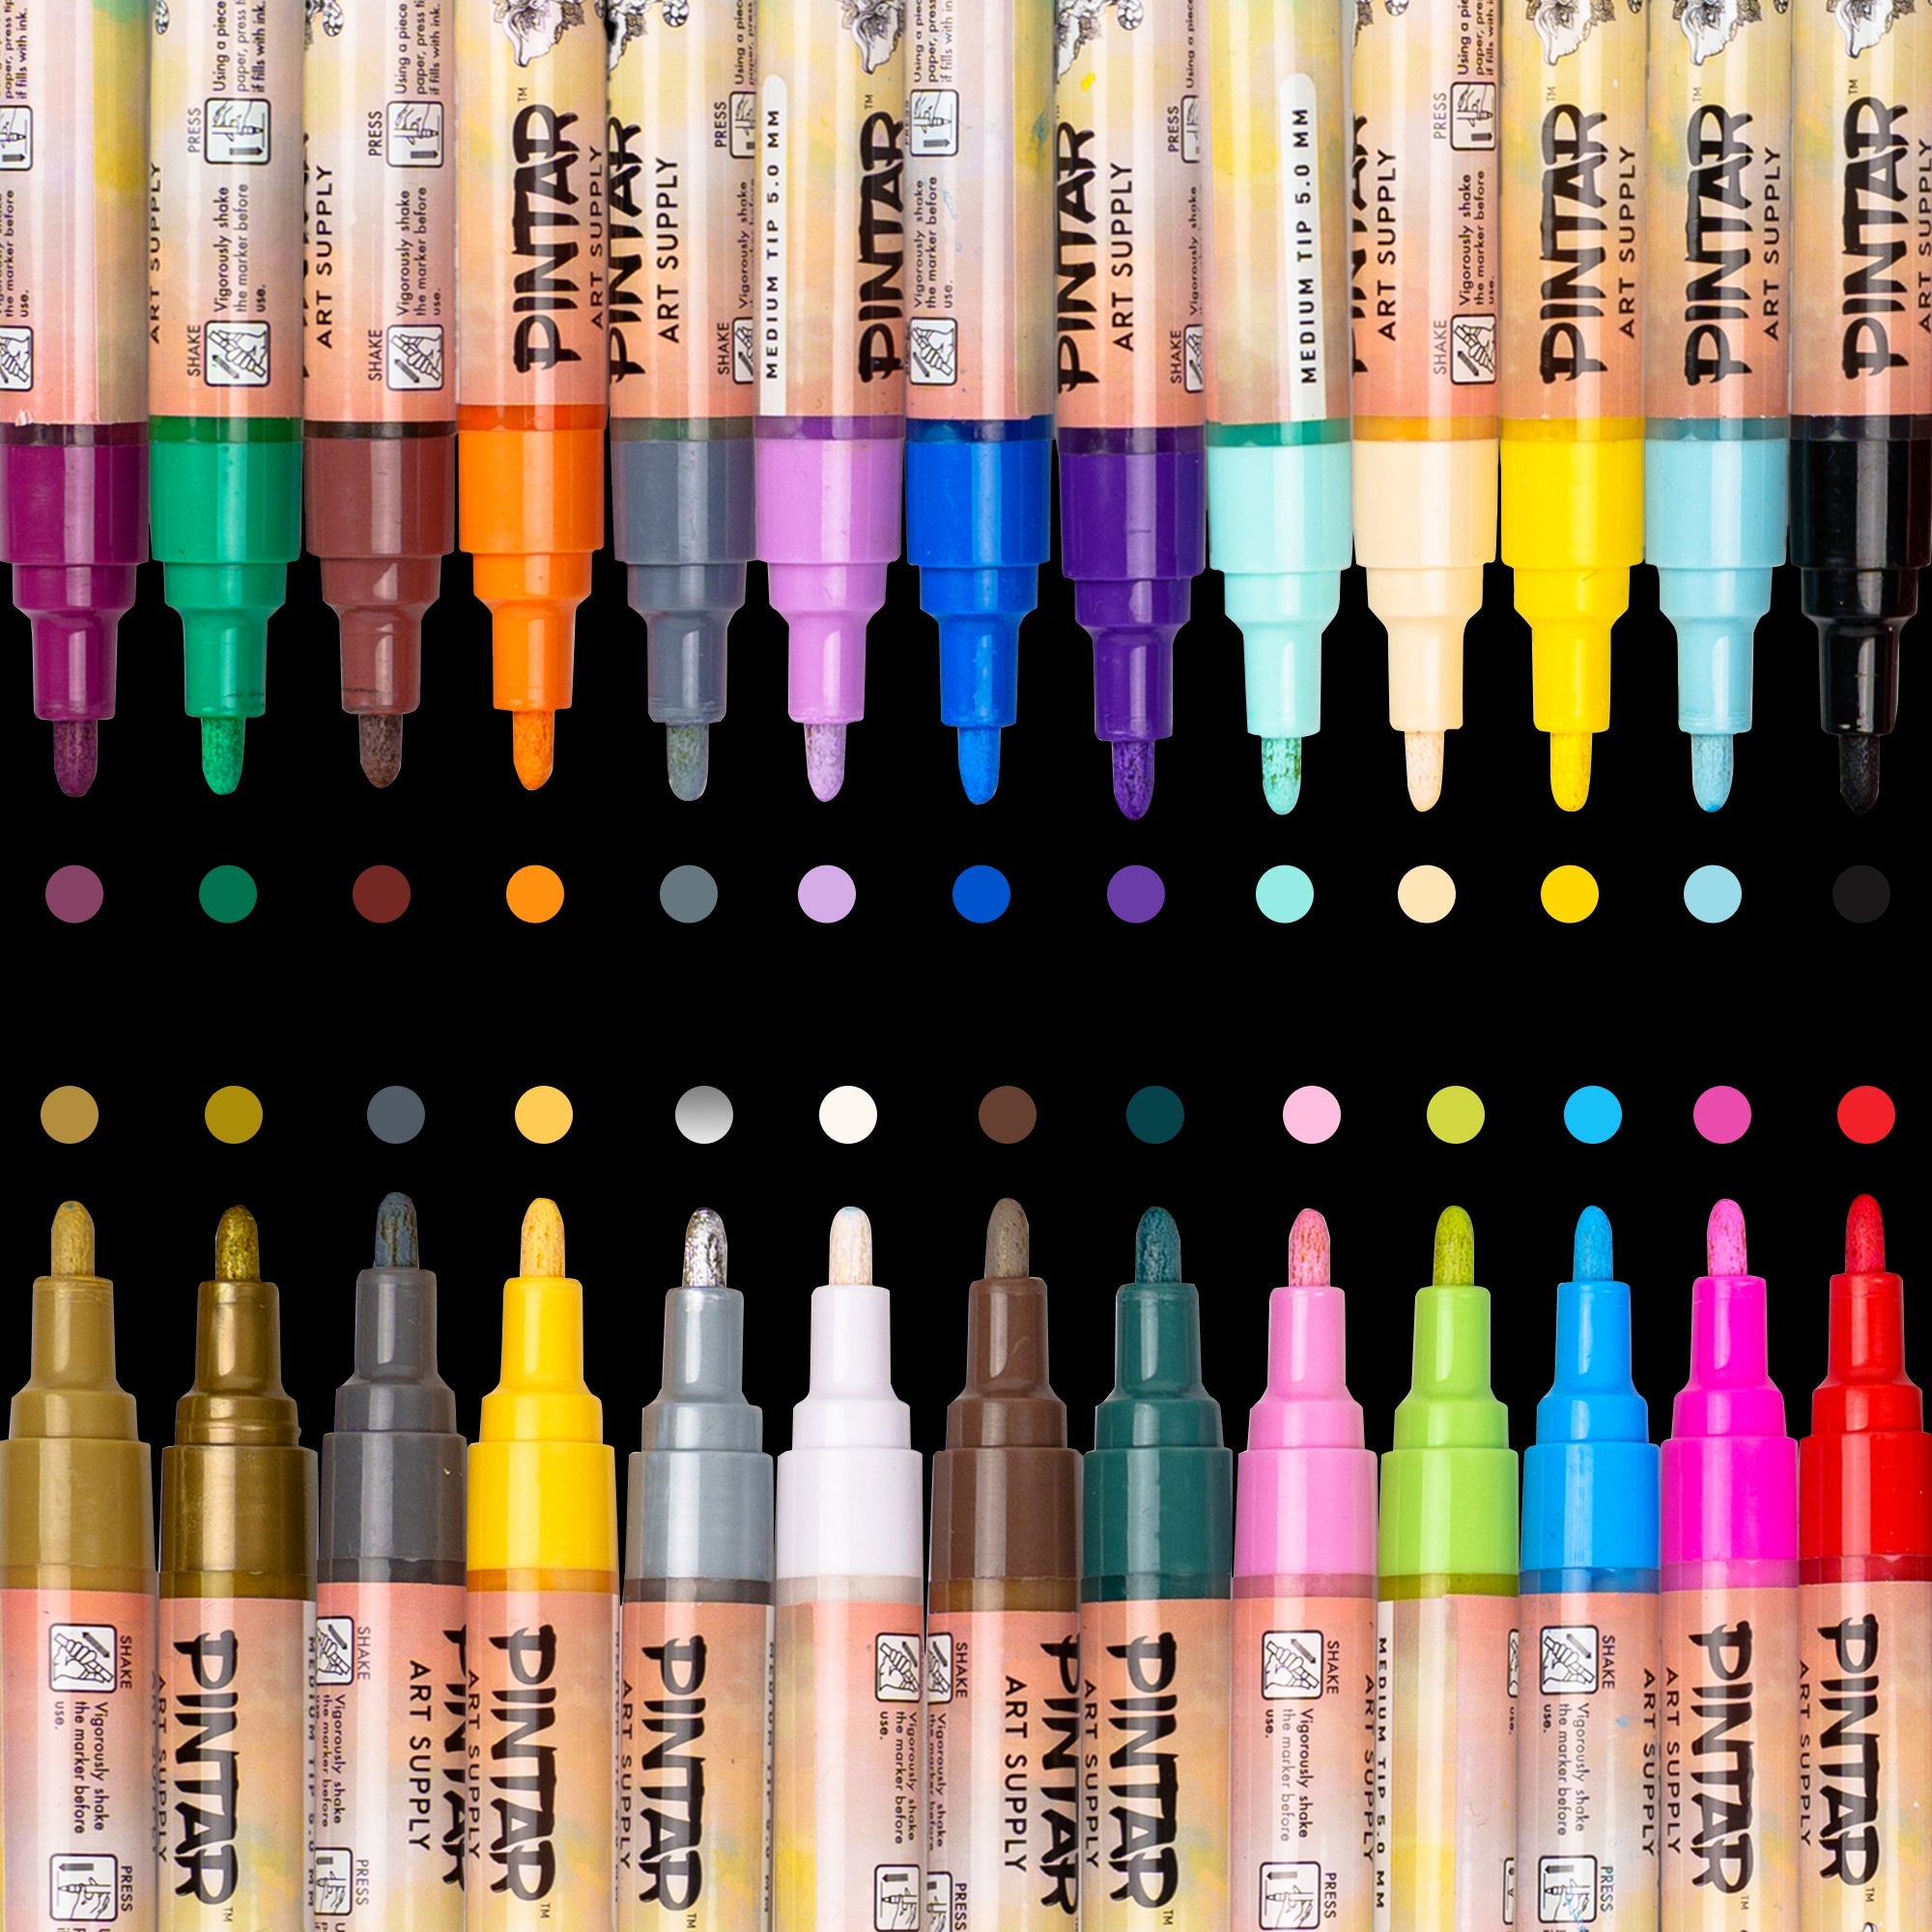 PINTAR Premium Oil Paint Pens - (24-Pack) 20 Medium Tip(5mm) & 4